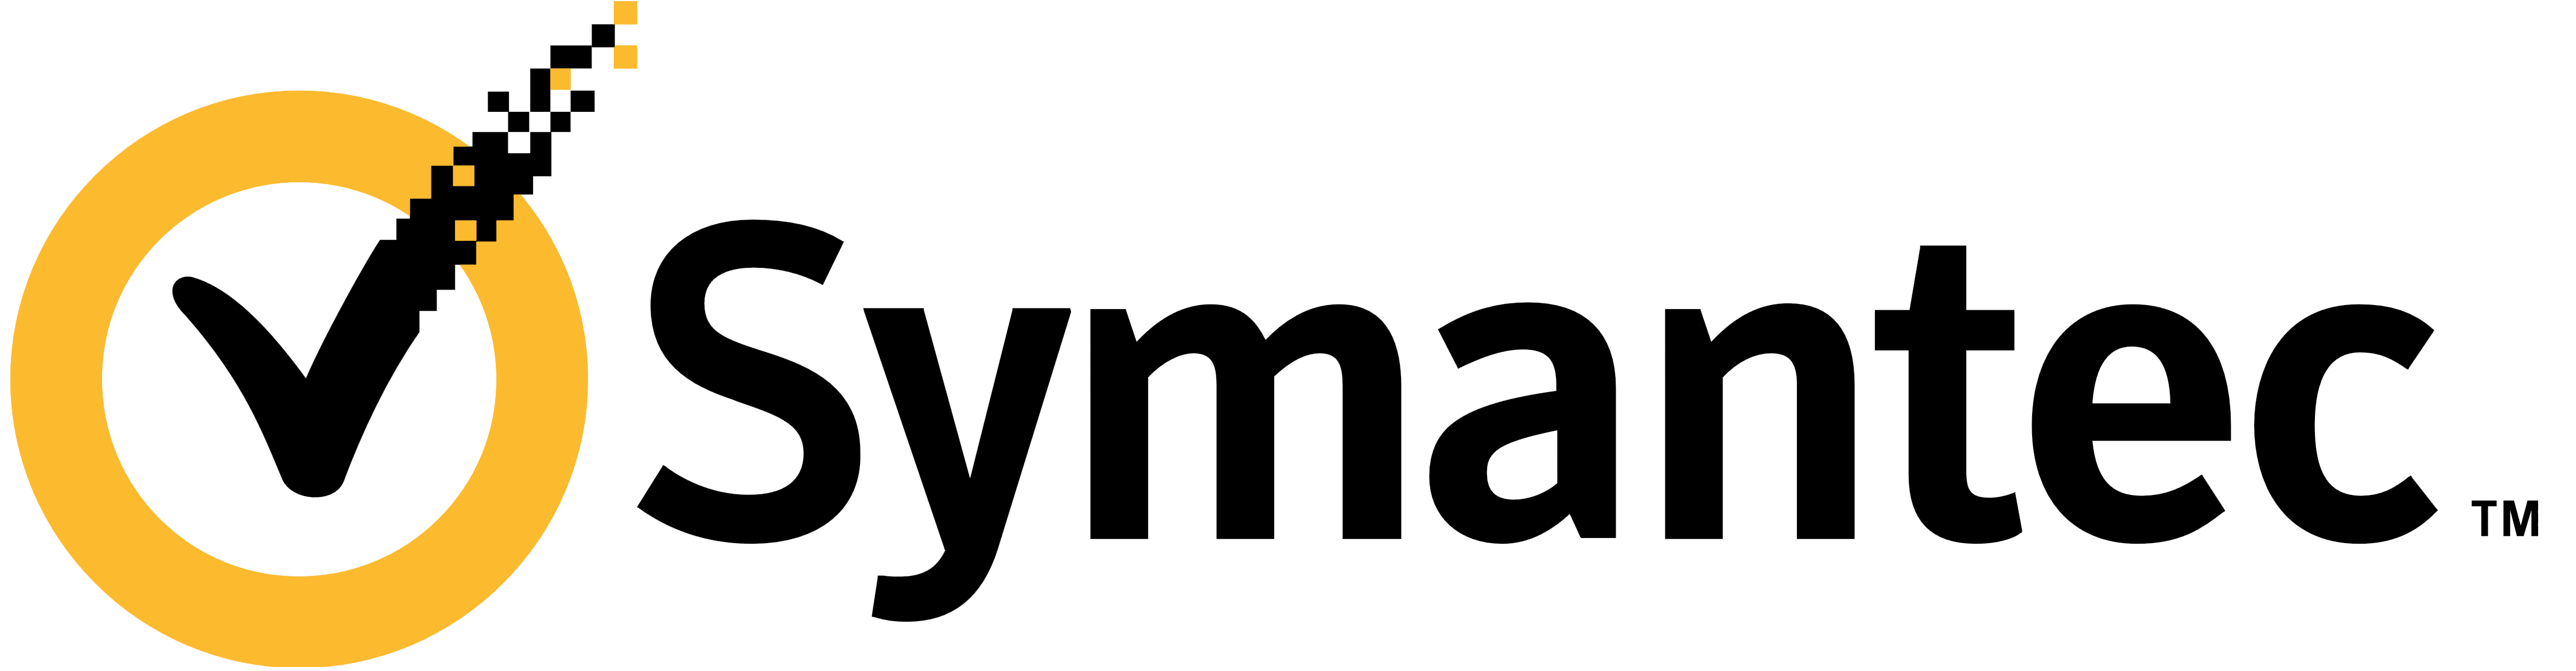 Symantec logo, logotype